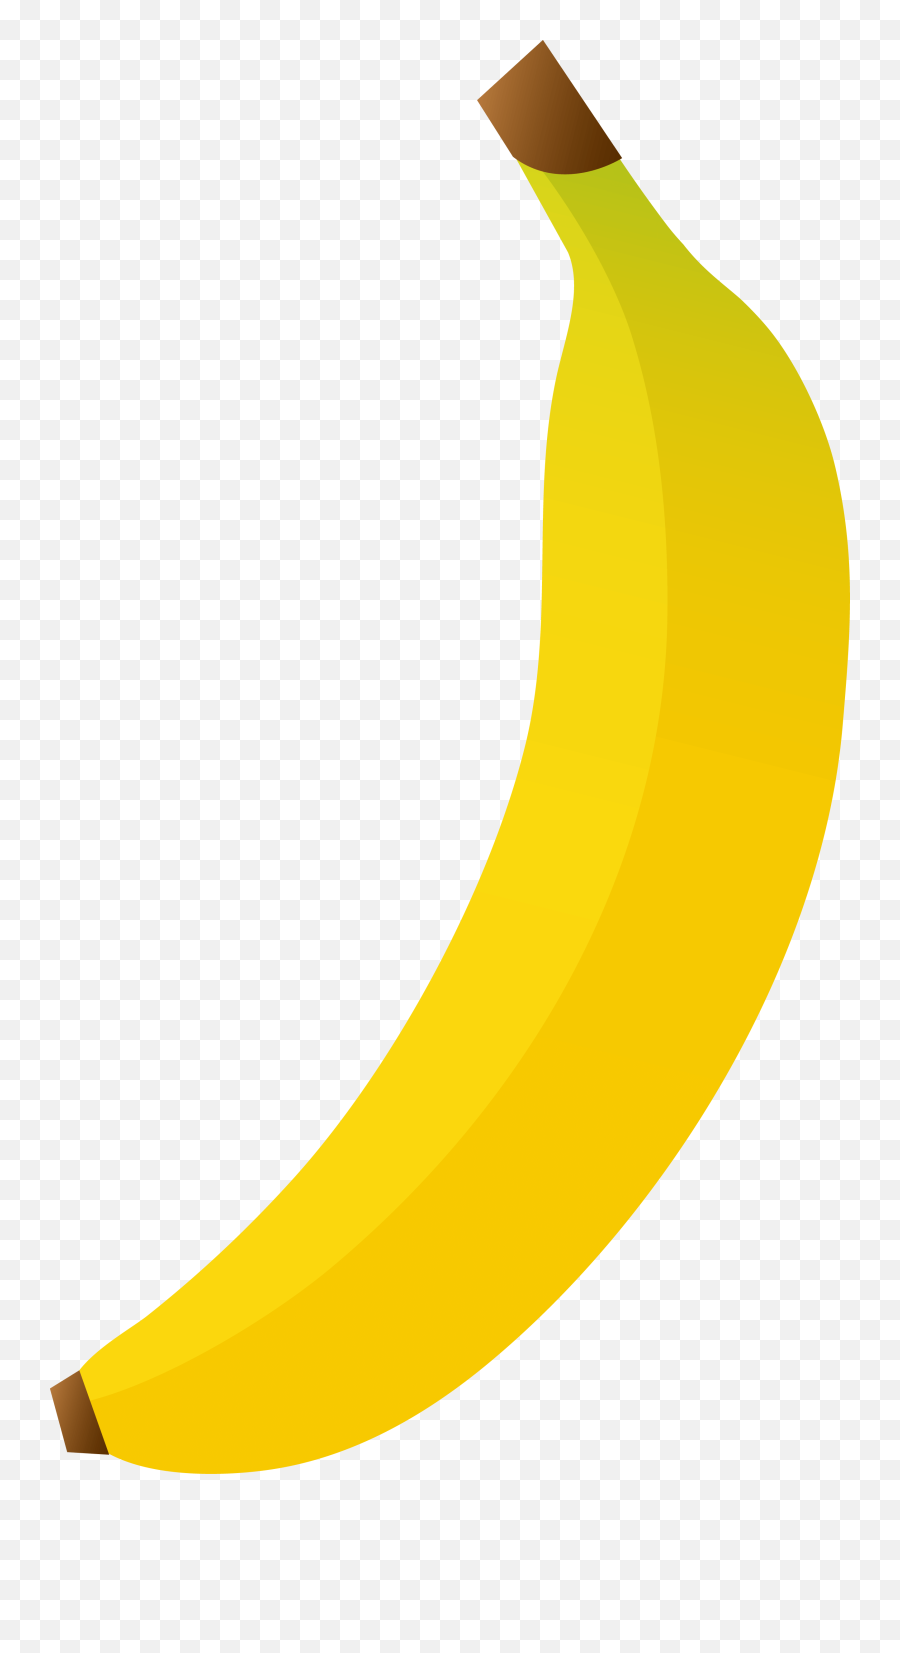 Banana Clip Art 2 Image - Banana Clipart Emoji,Banana Clipart